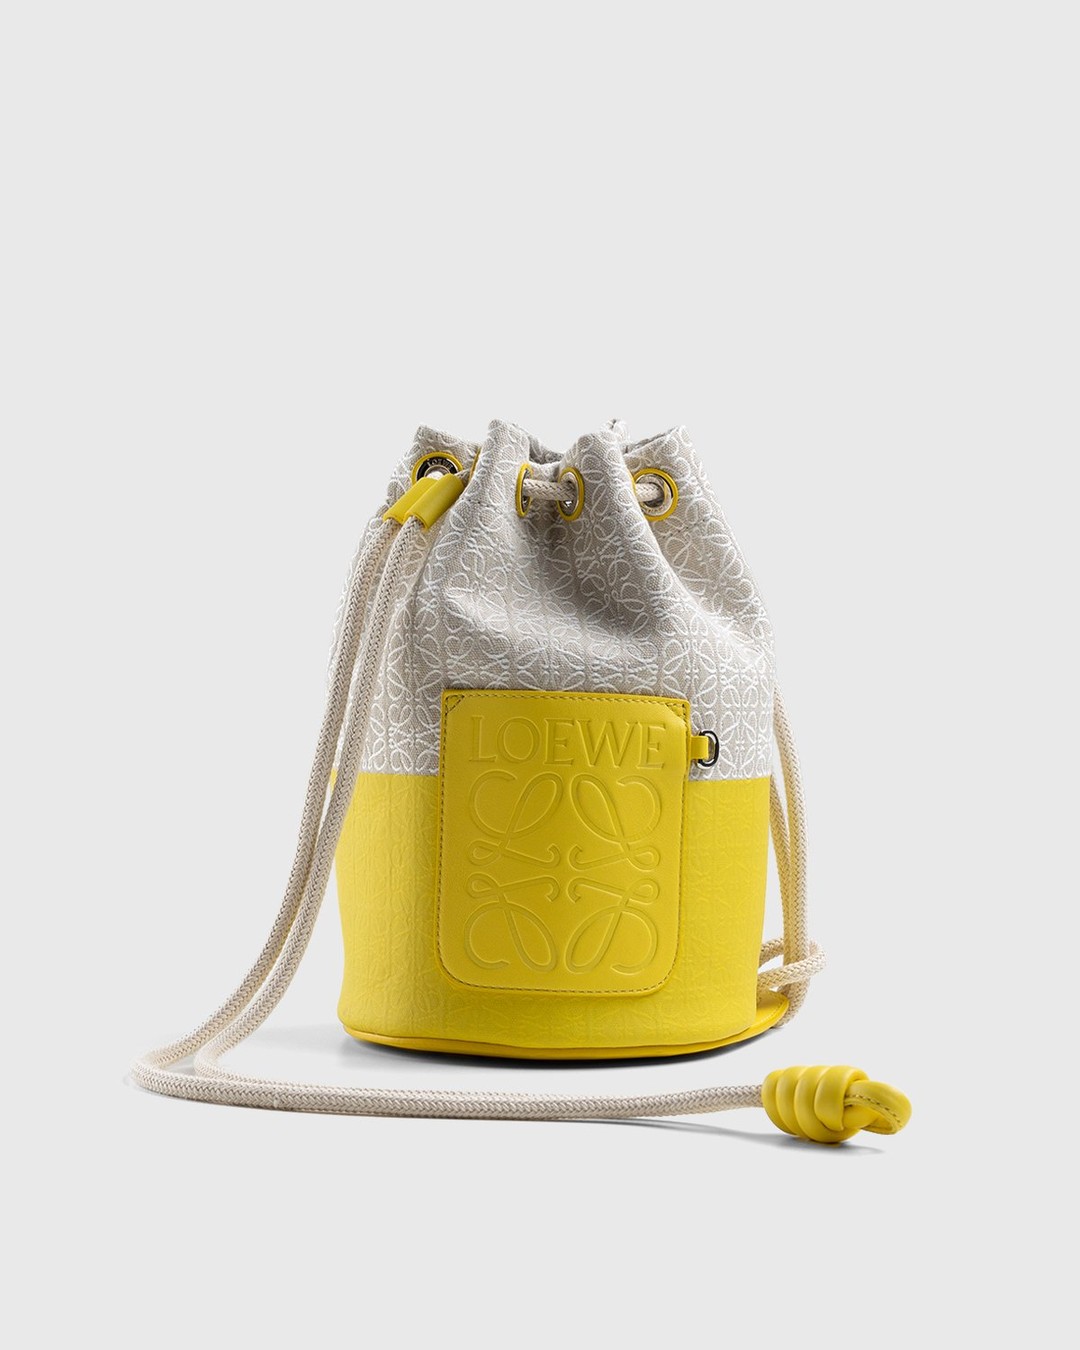 Loewe – Paula's Ibiza Small Sailor Bag Ecru/Lemon - Bags - Yellow - Image 1